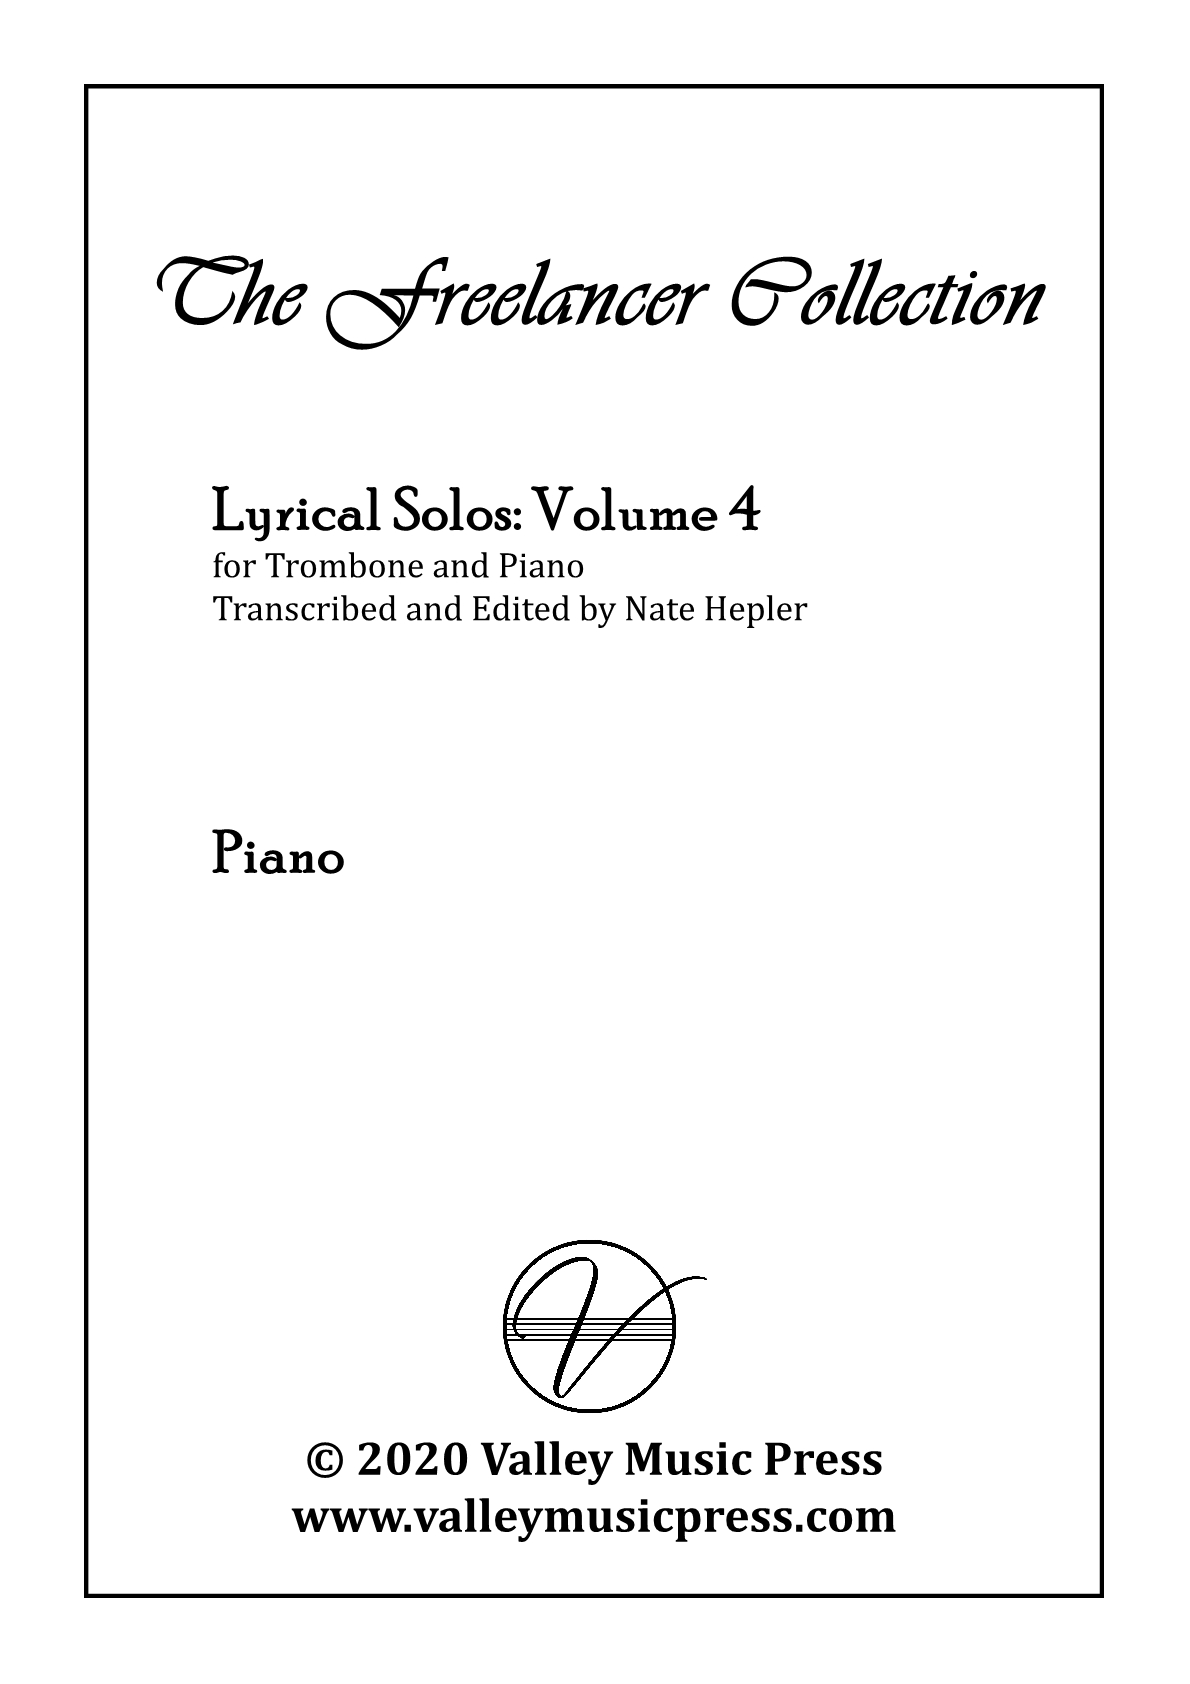 Hepler - Freelancer Collection Lyrical Solos Vol 4 (Trb & Piano)